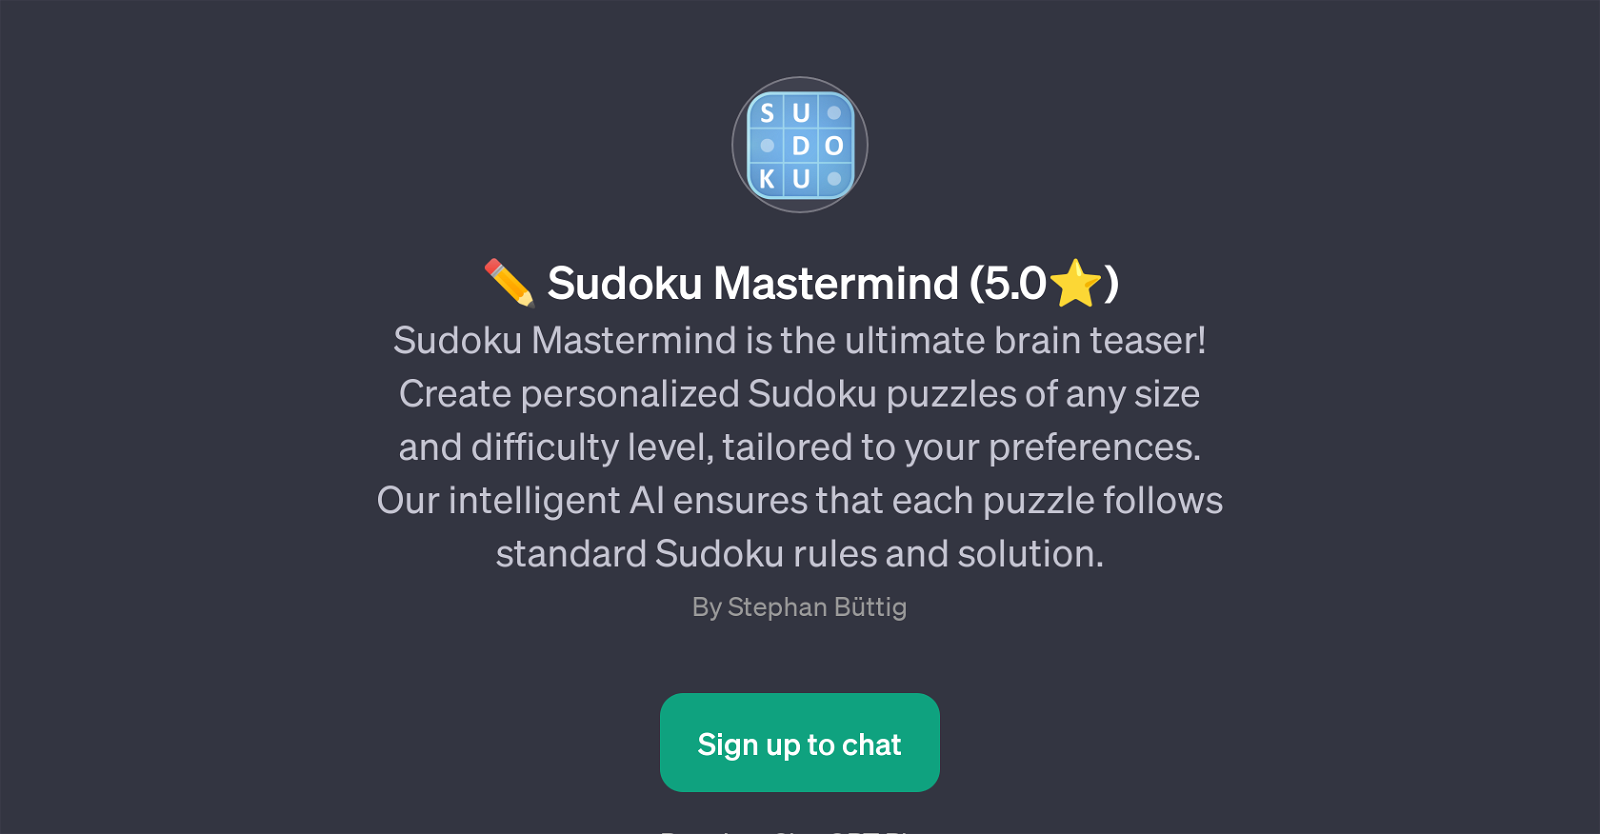 Sudoku Mastermind website